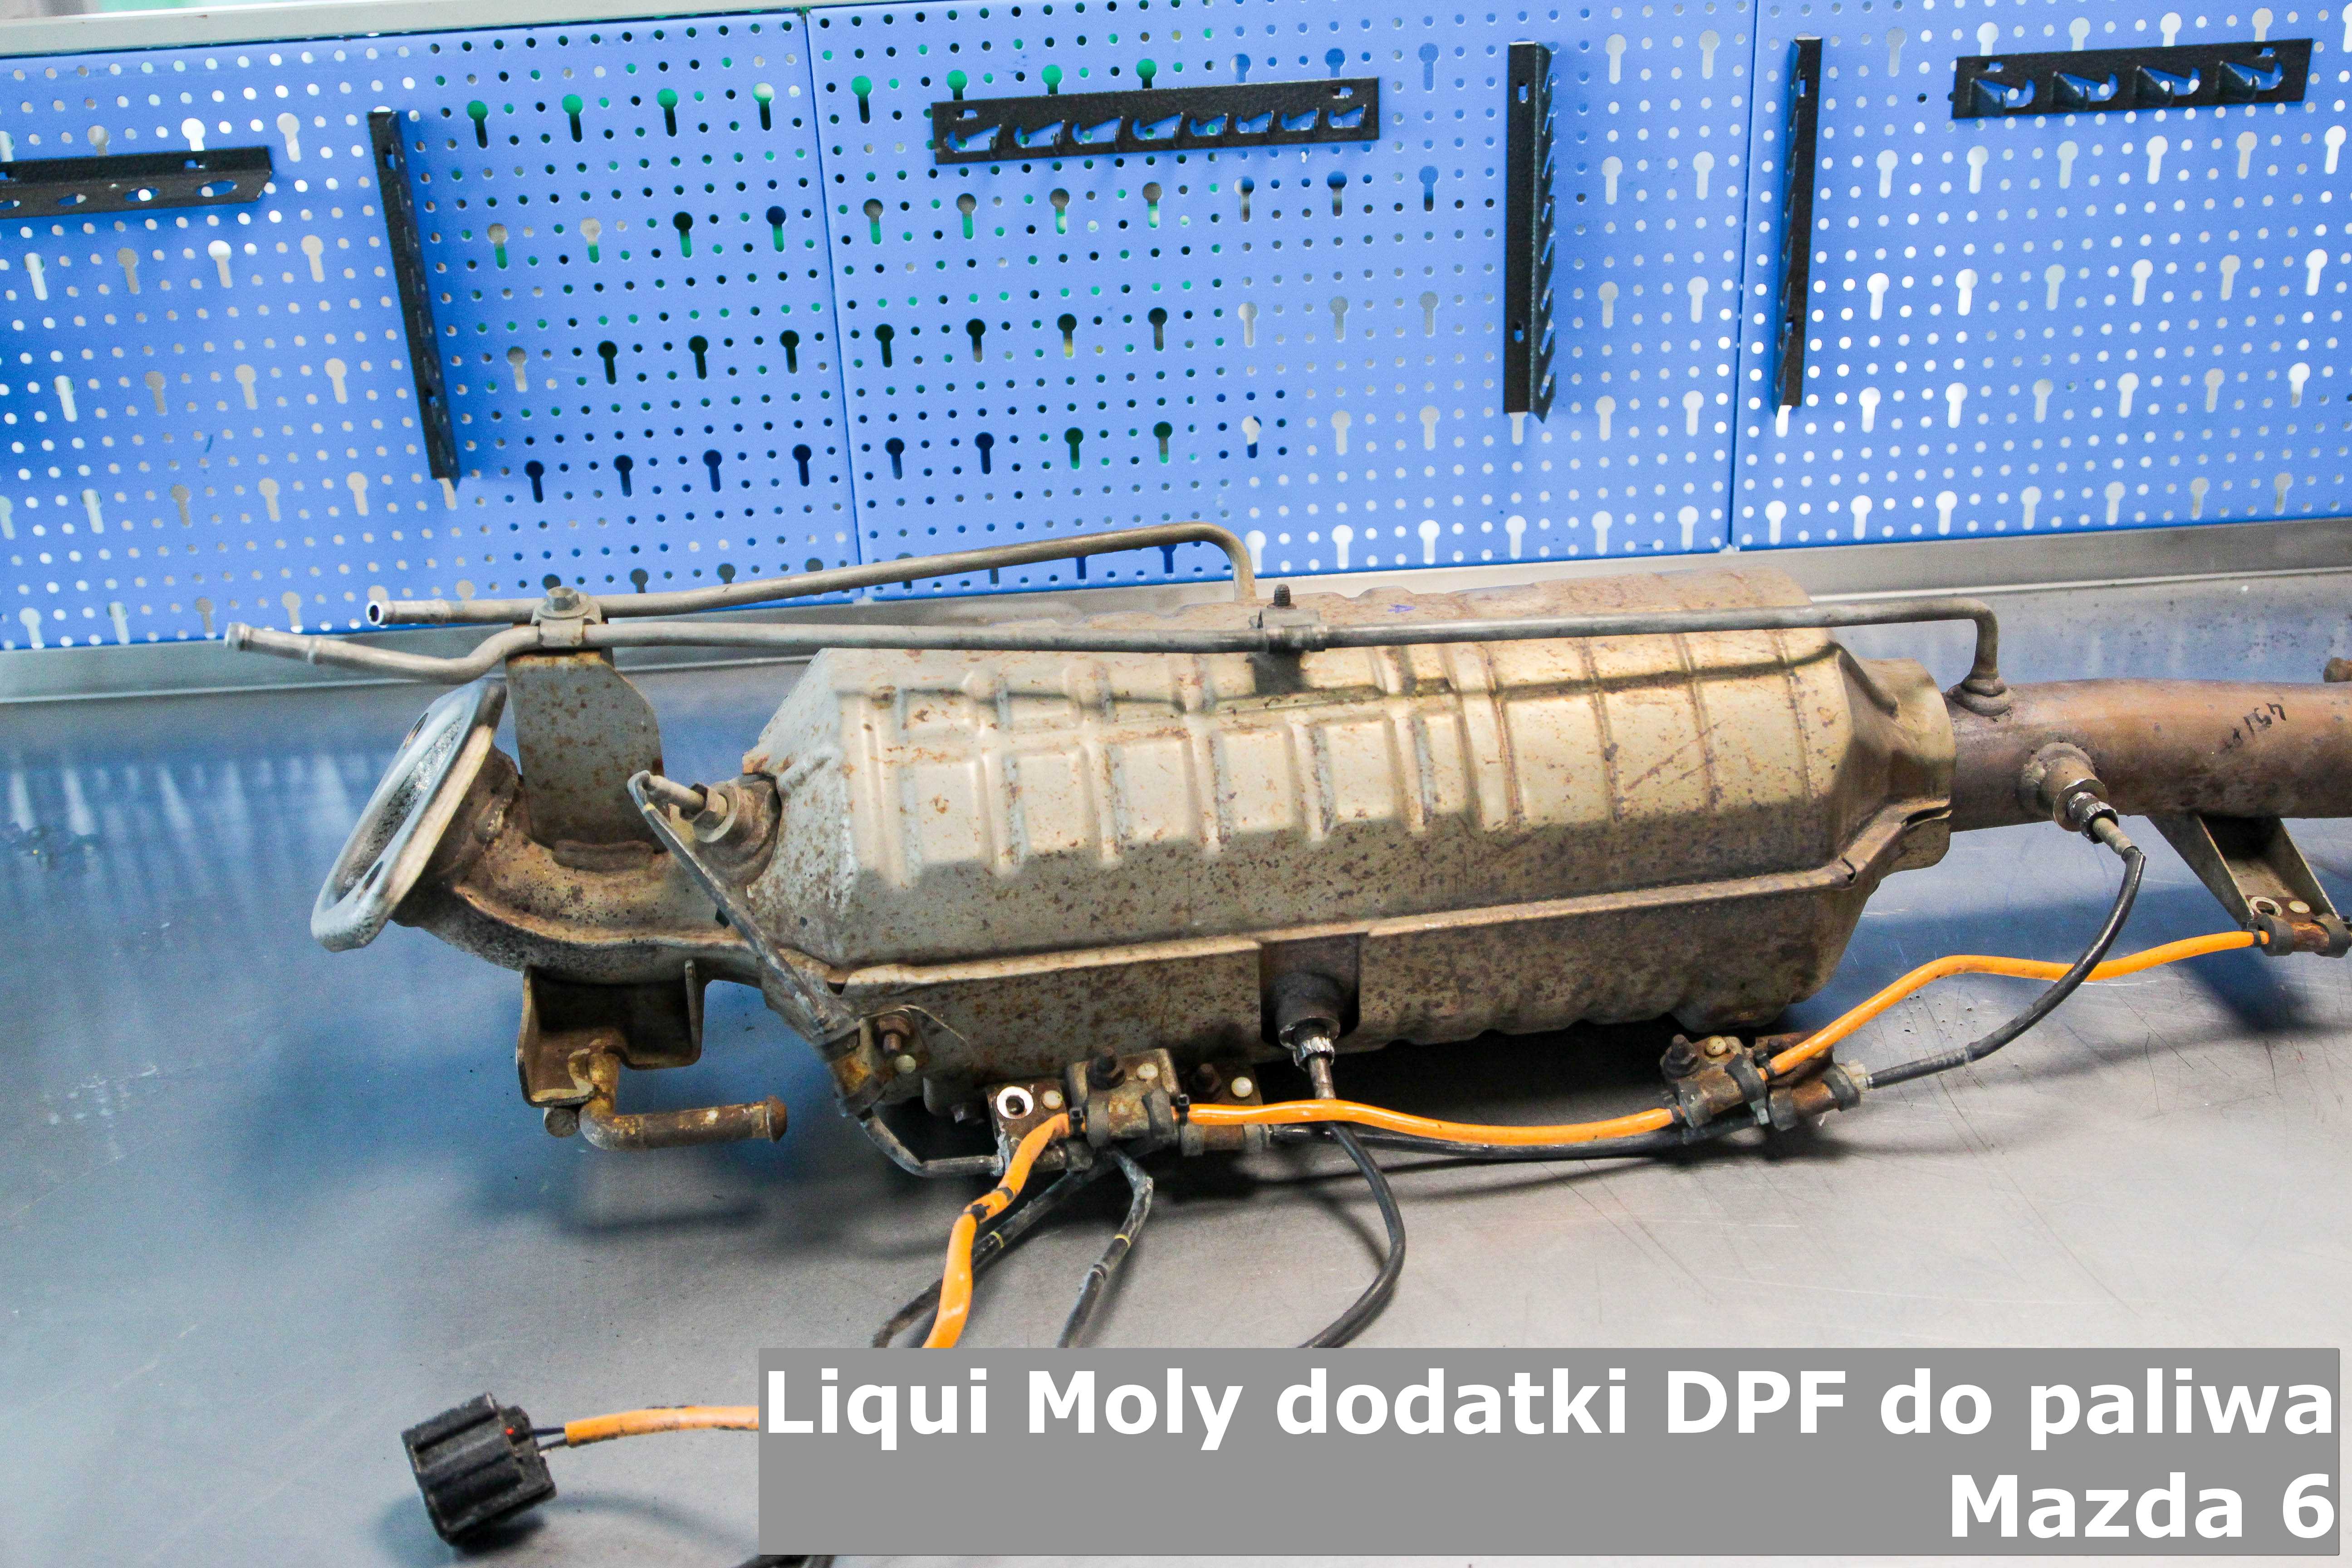 Liqui Moly DPF dodatki DPF do paliwa filtrydpffap.pl